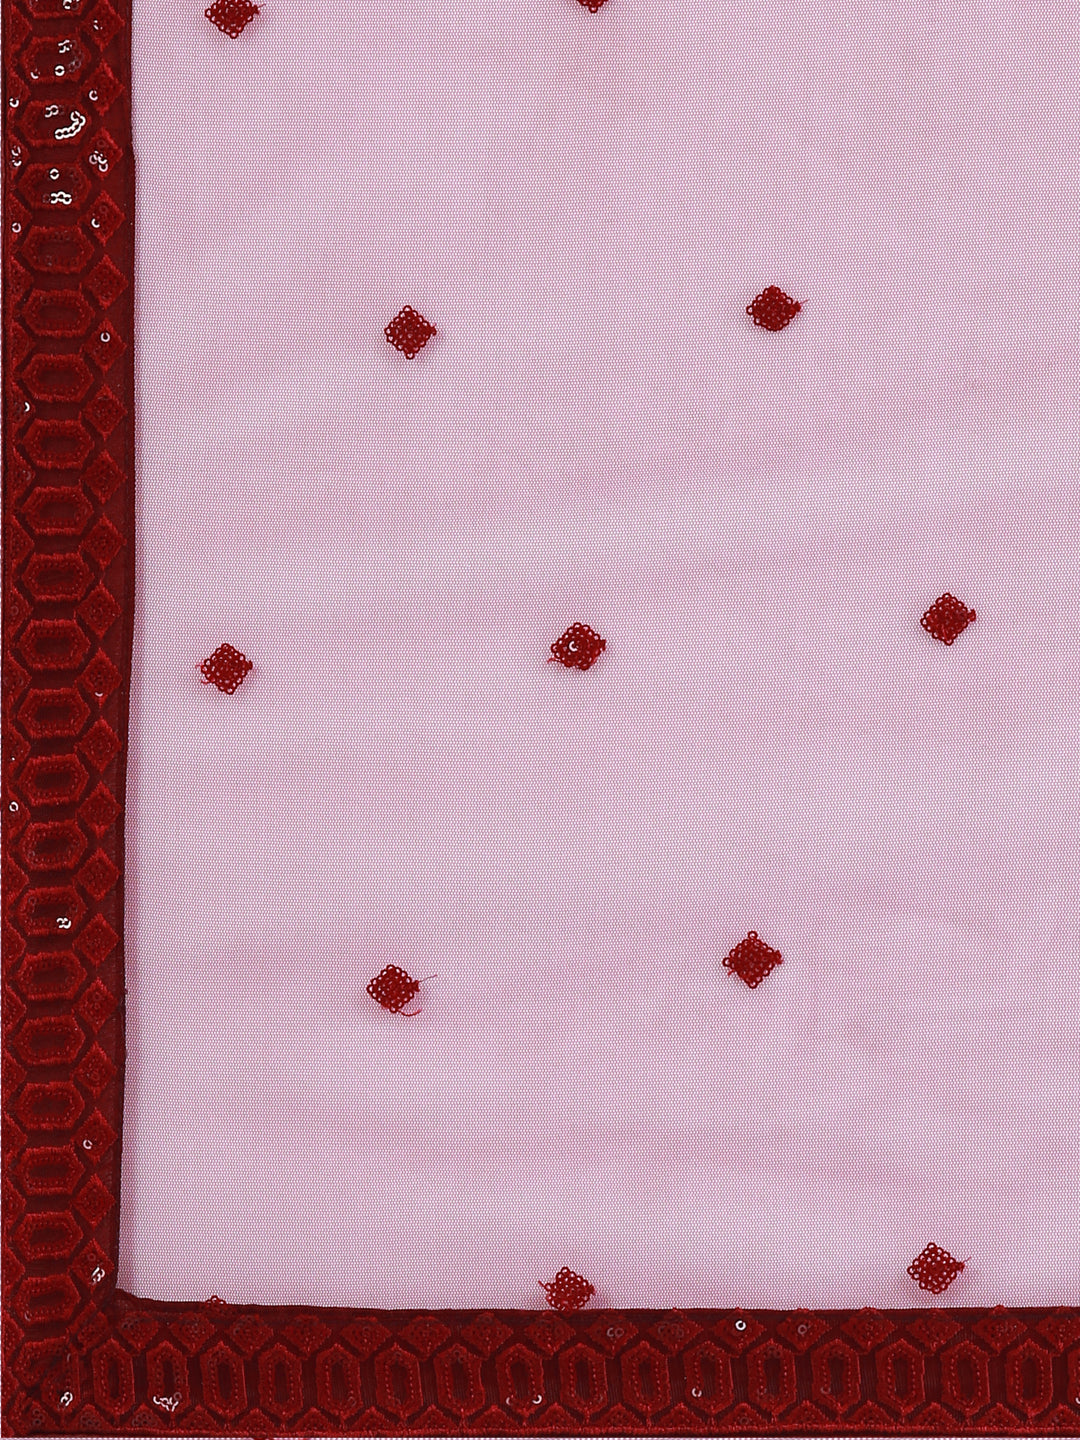 Women's Maroon Net Sequinse Work Fully-Stitched Lehenga & Stitched Blouse, Dupatta - Royal Dwells